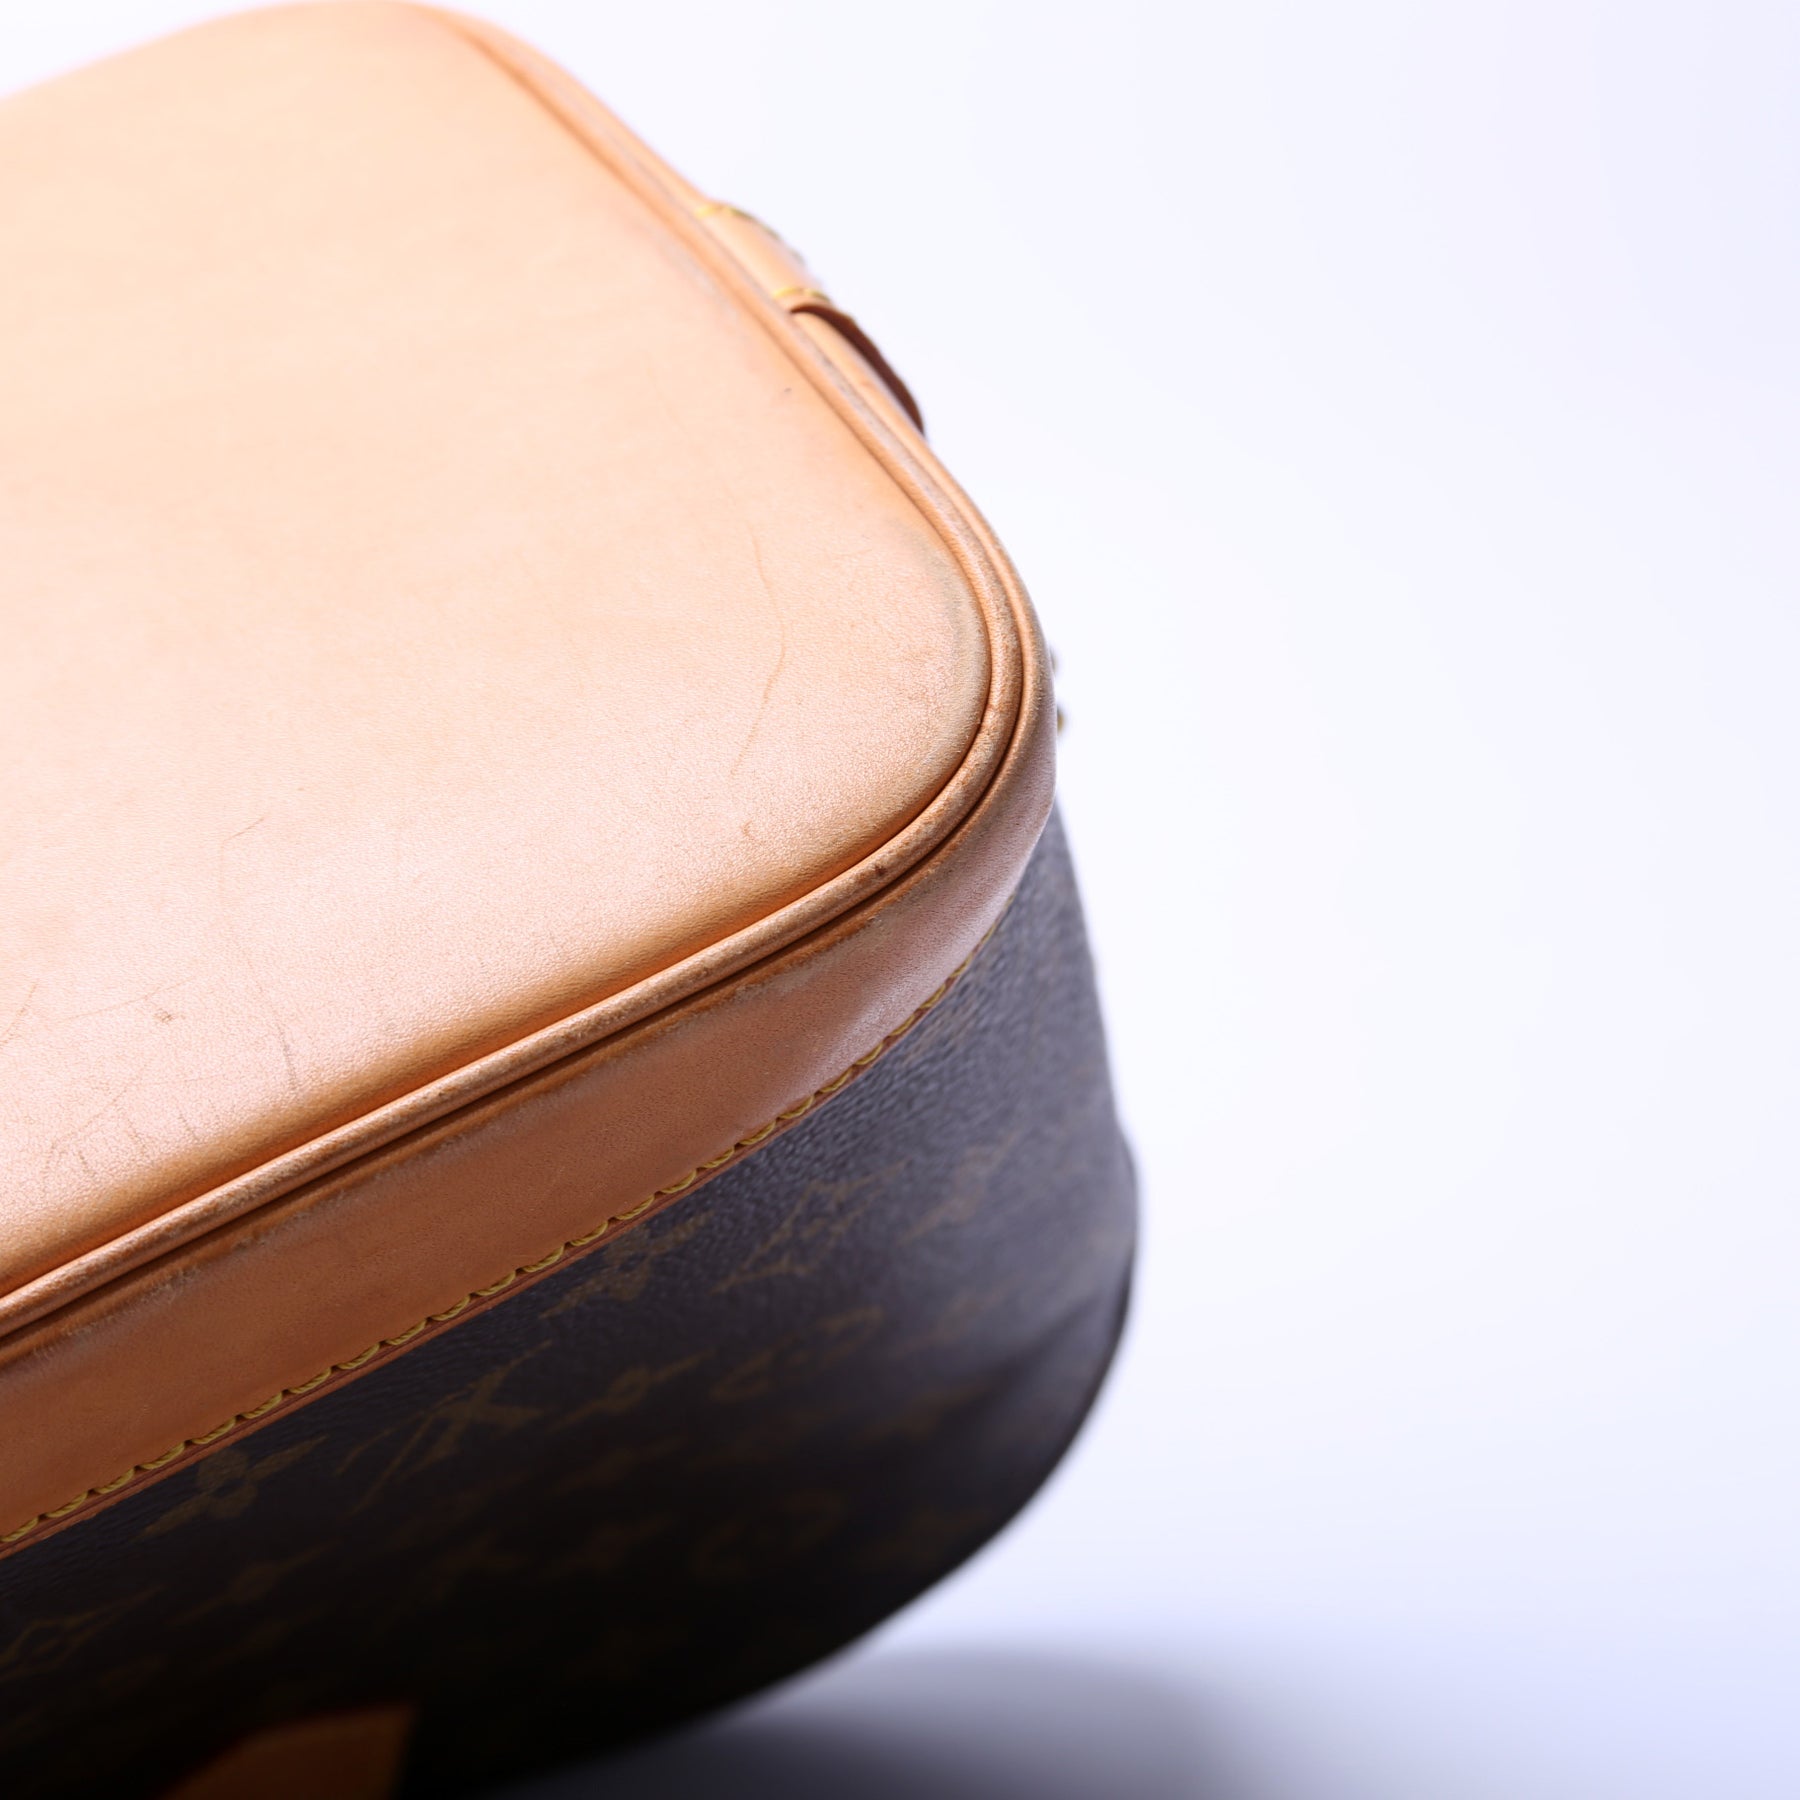 Alma PM Damier Ebene Older – Keeks Designer Handbags